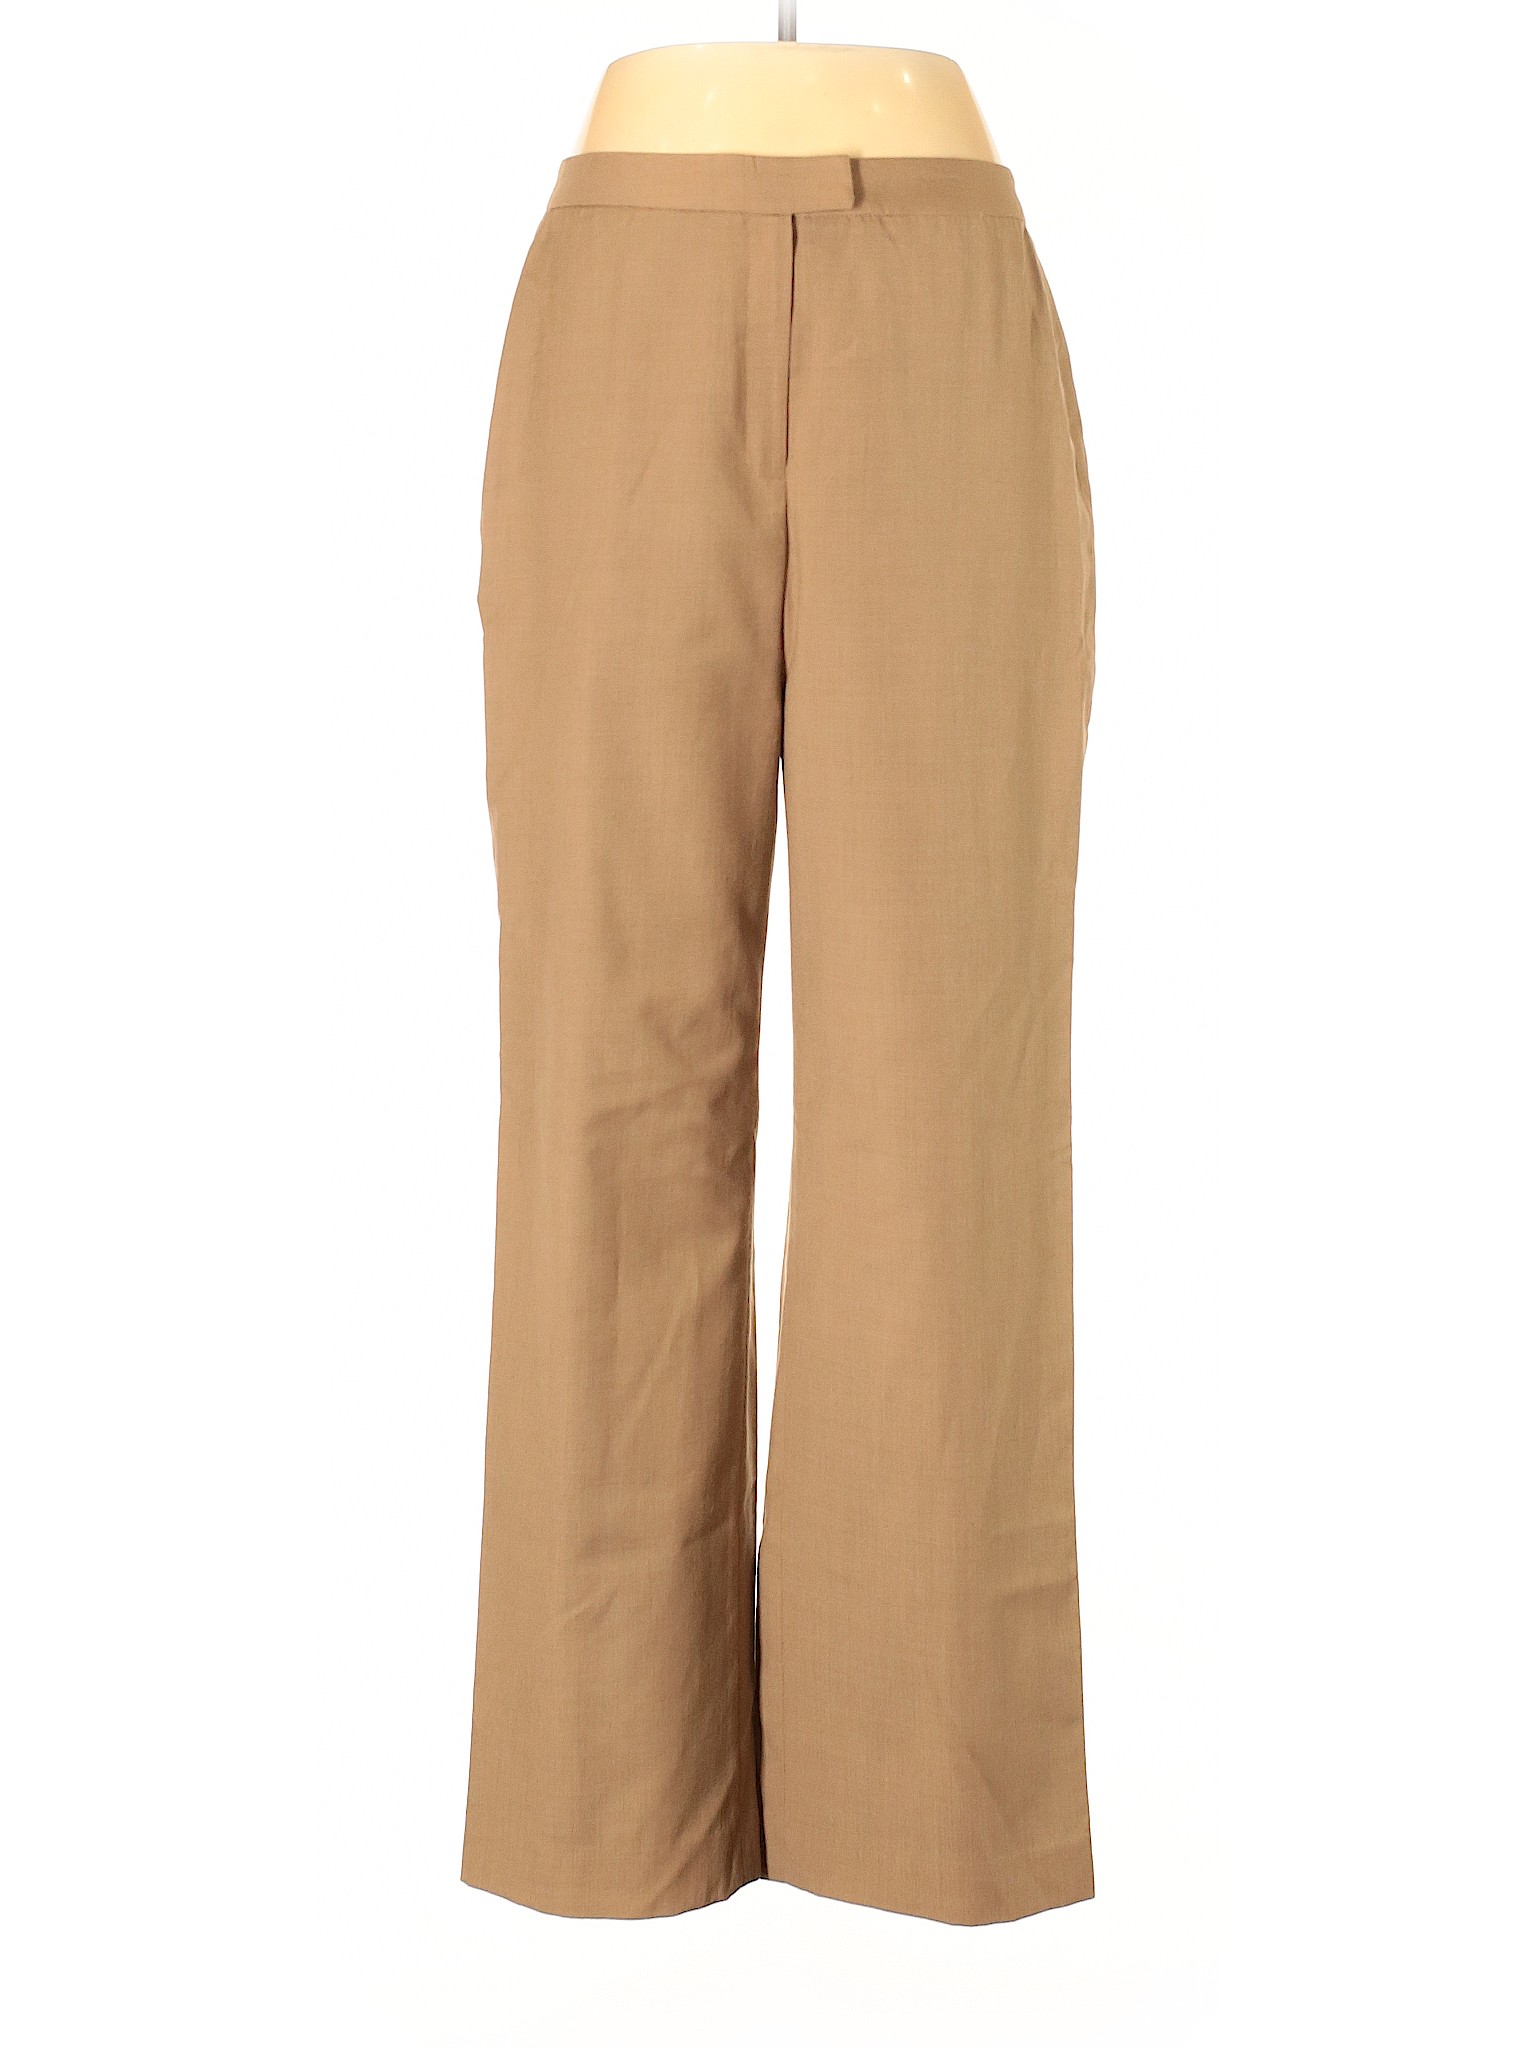 Jones New York Women Brown Wool Pants 12 | eBay